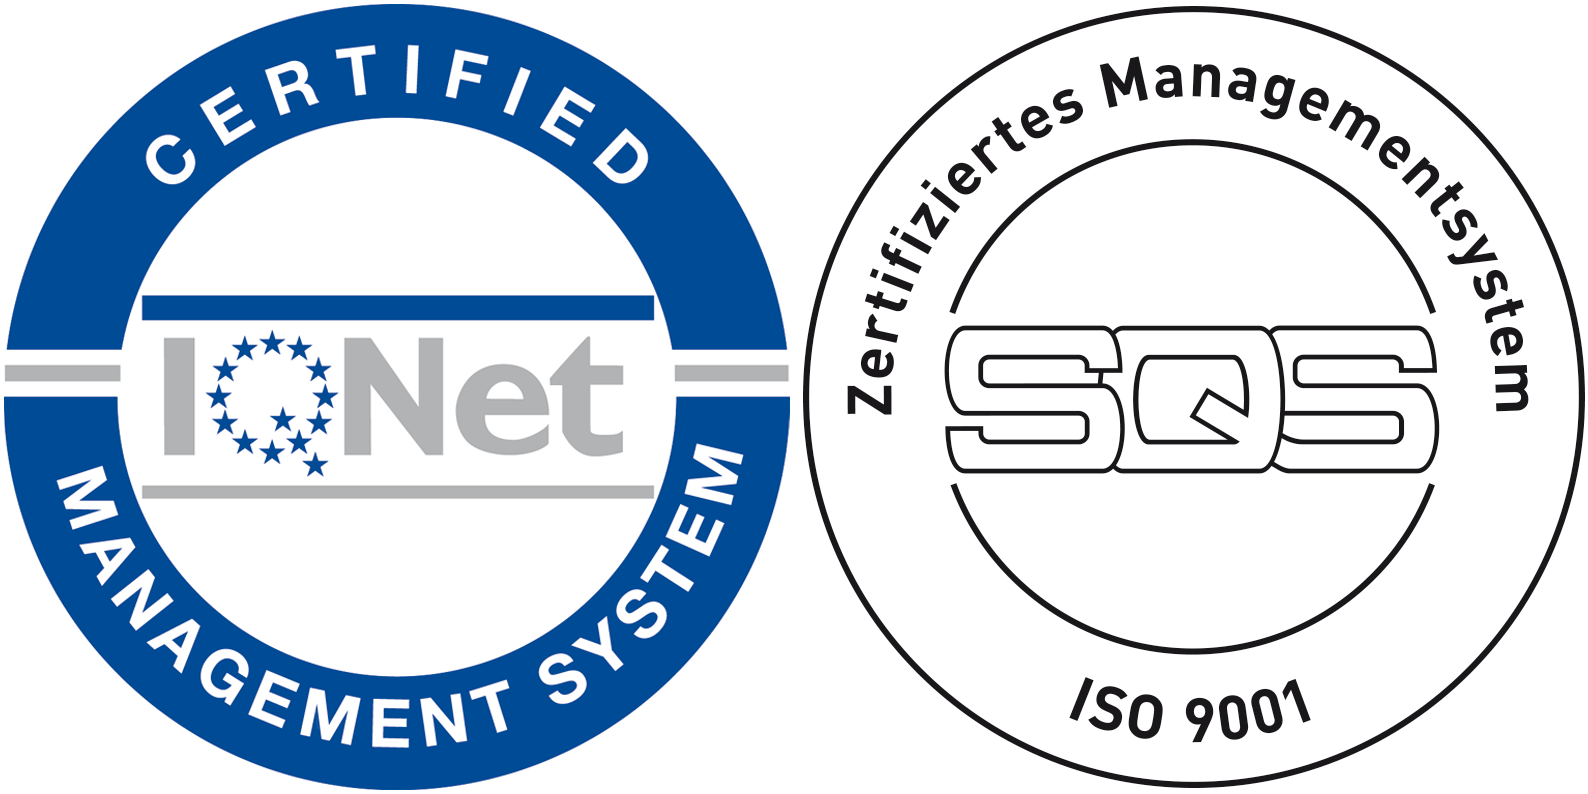 ISO-Zertifizierungen: Certified Management System IQNet, ISO 9001:2015